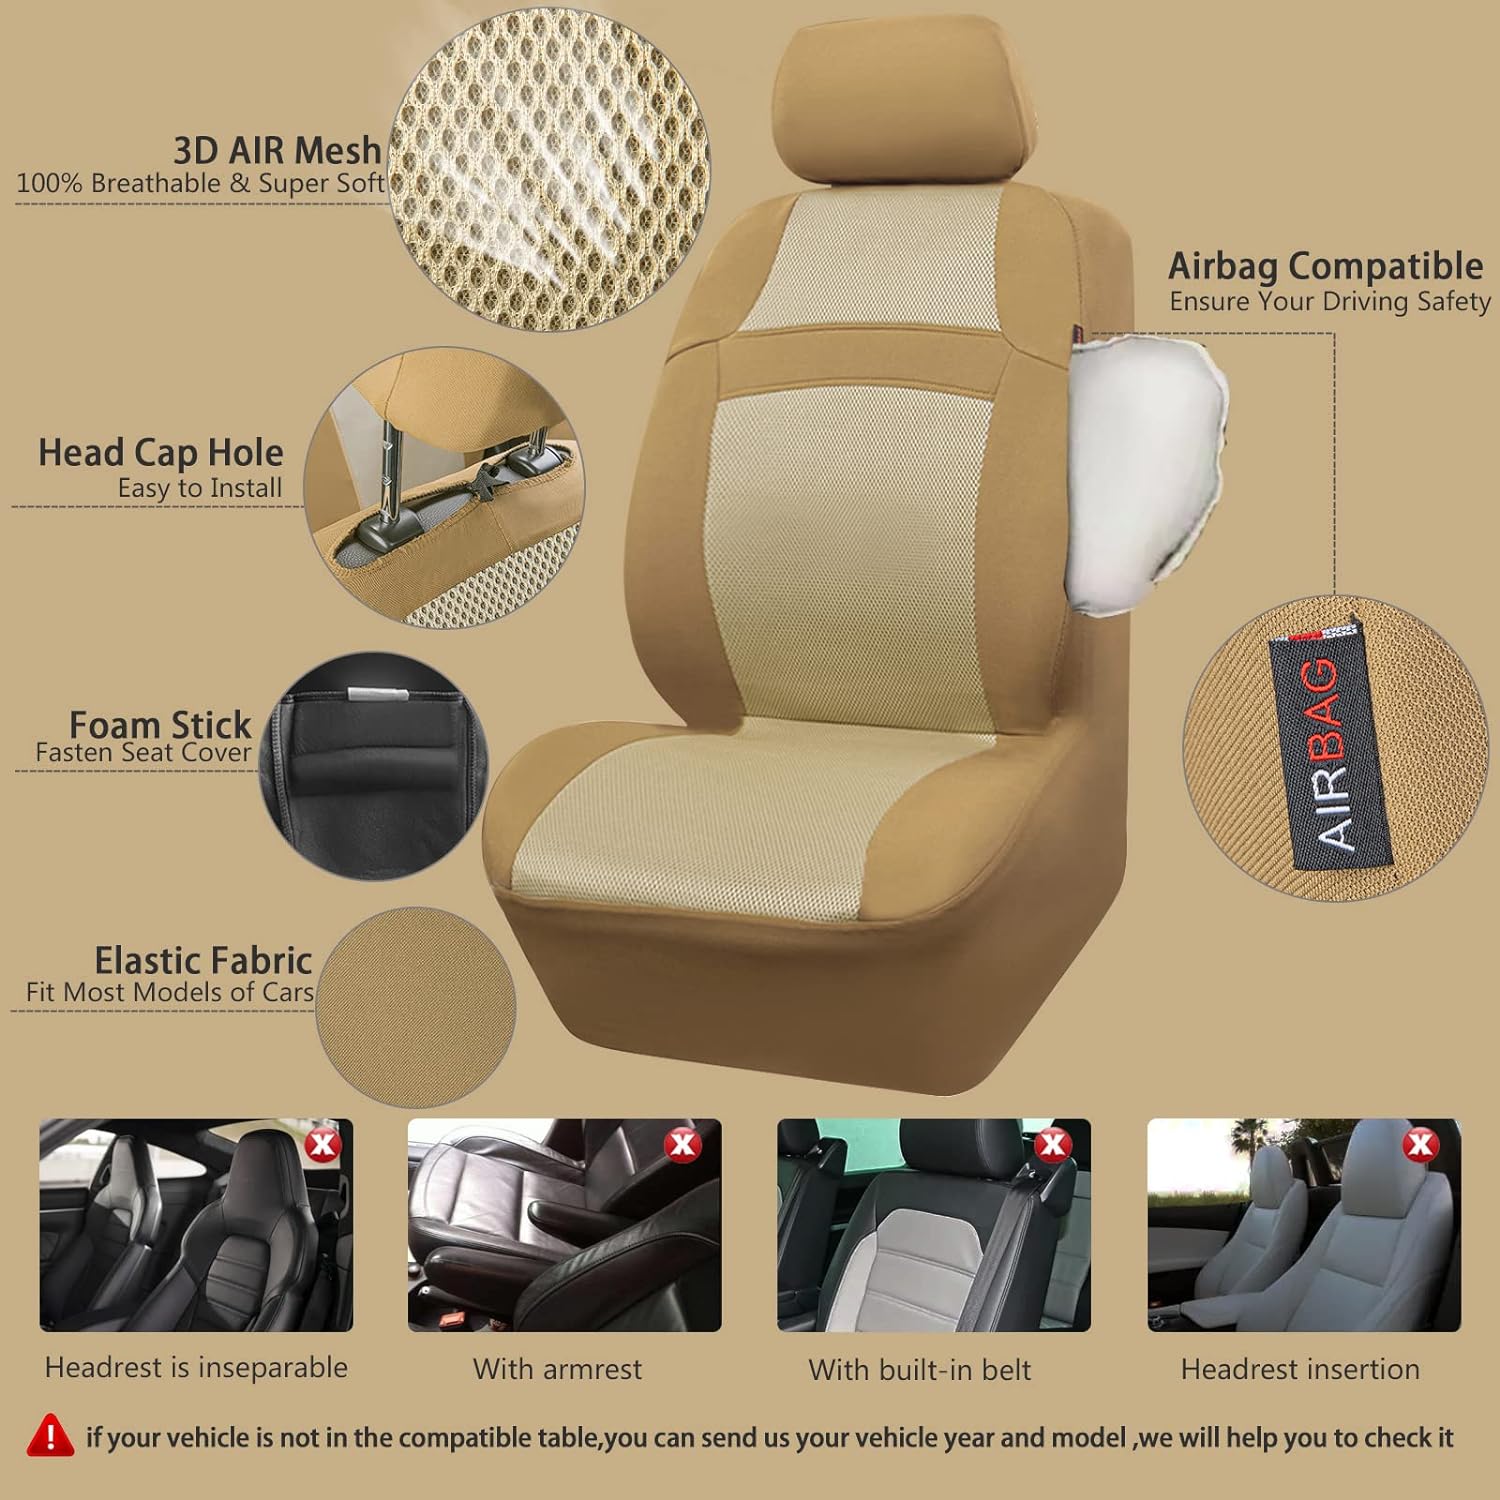 CAR PASS Seat Cover Full Sets and car mats, 3D Air Mesh Car Seat, 3D Air Mesh Car Seat Cover with 5mm Composite Sponge Inside,Airbag Compatible Universal Fit for SUV,Vans,sedans, Trucks, (Pure Beige)